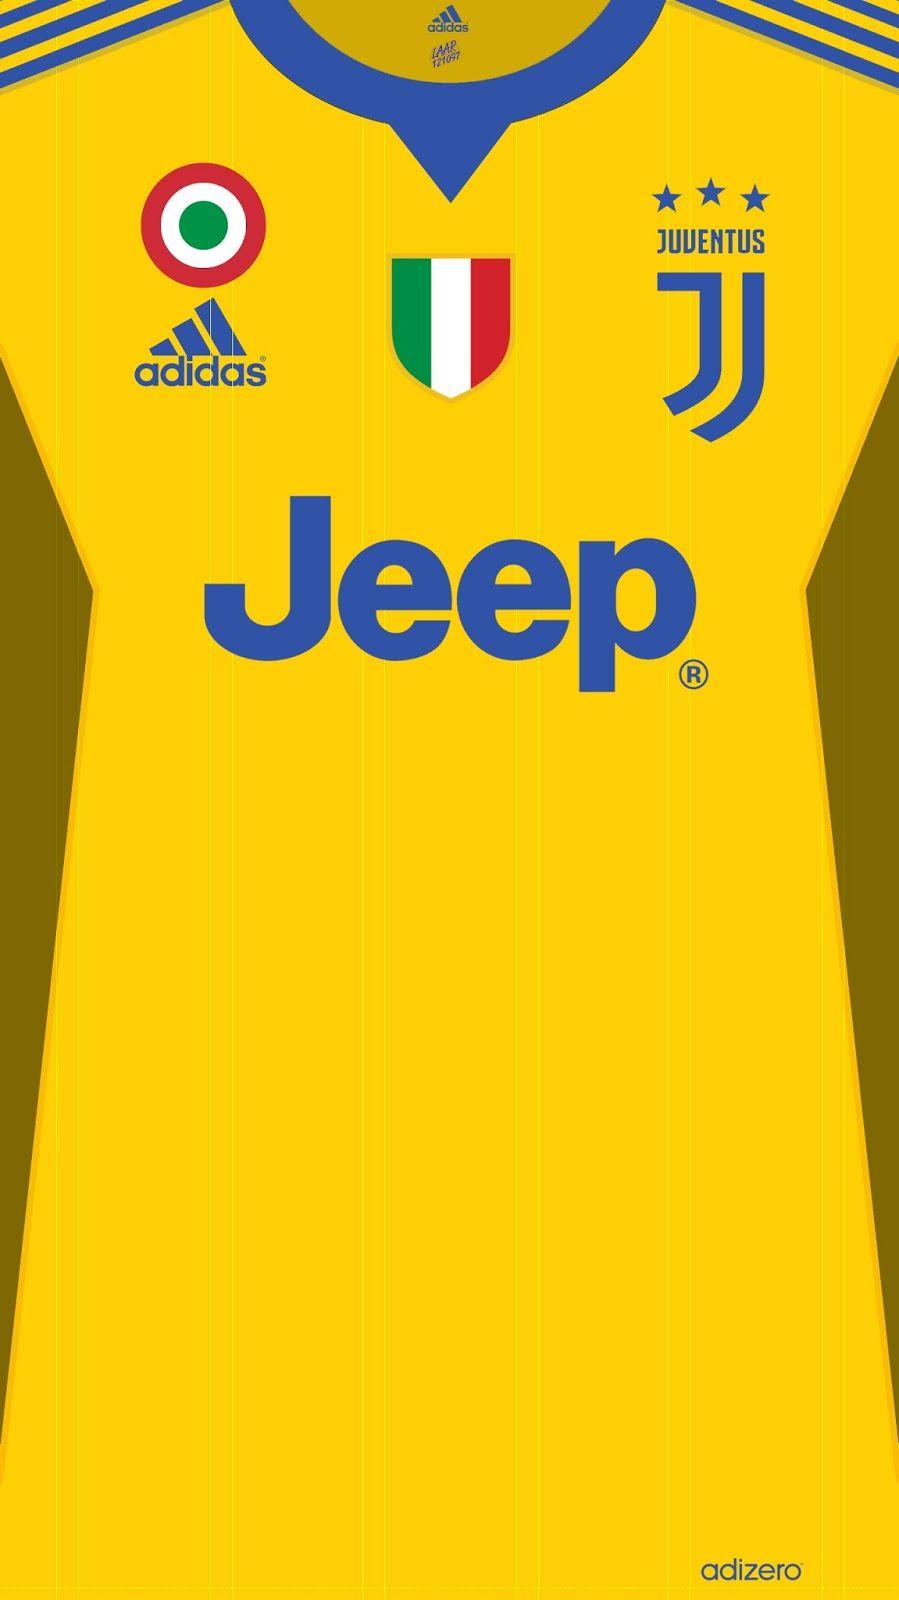 Kumpulan Wallpaper Kaos Juventus Terbaru | Bol4gol